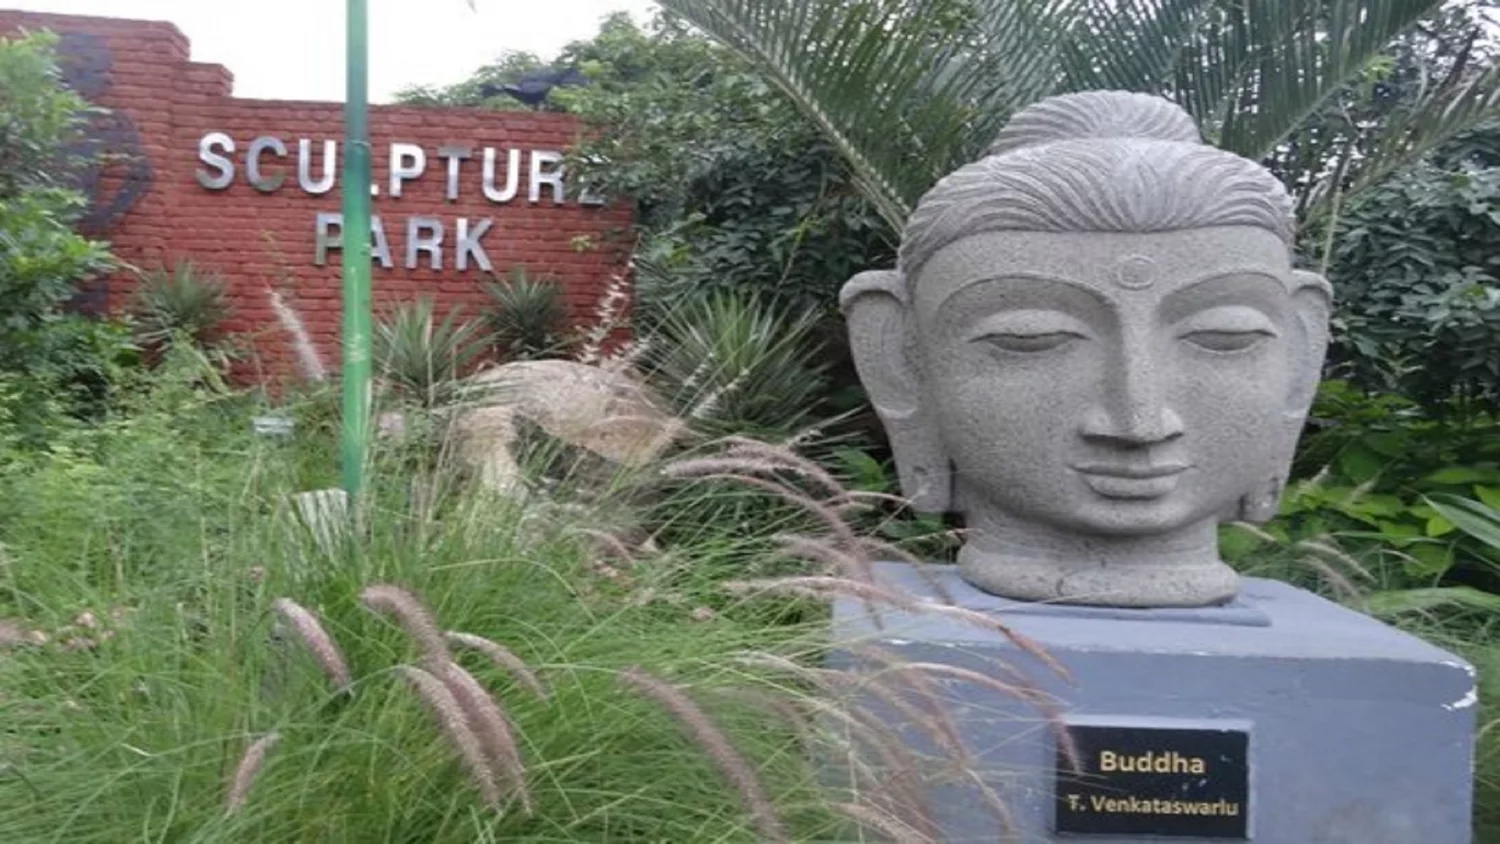 Shilparamam Sculpture Park